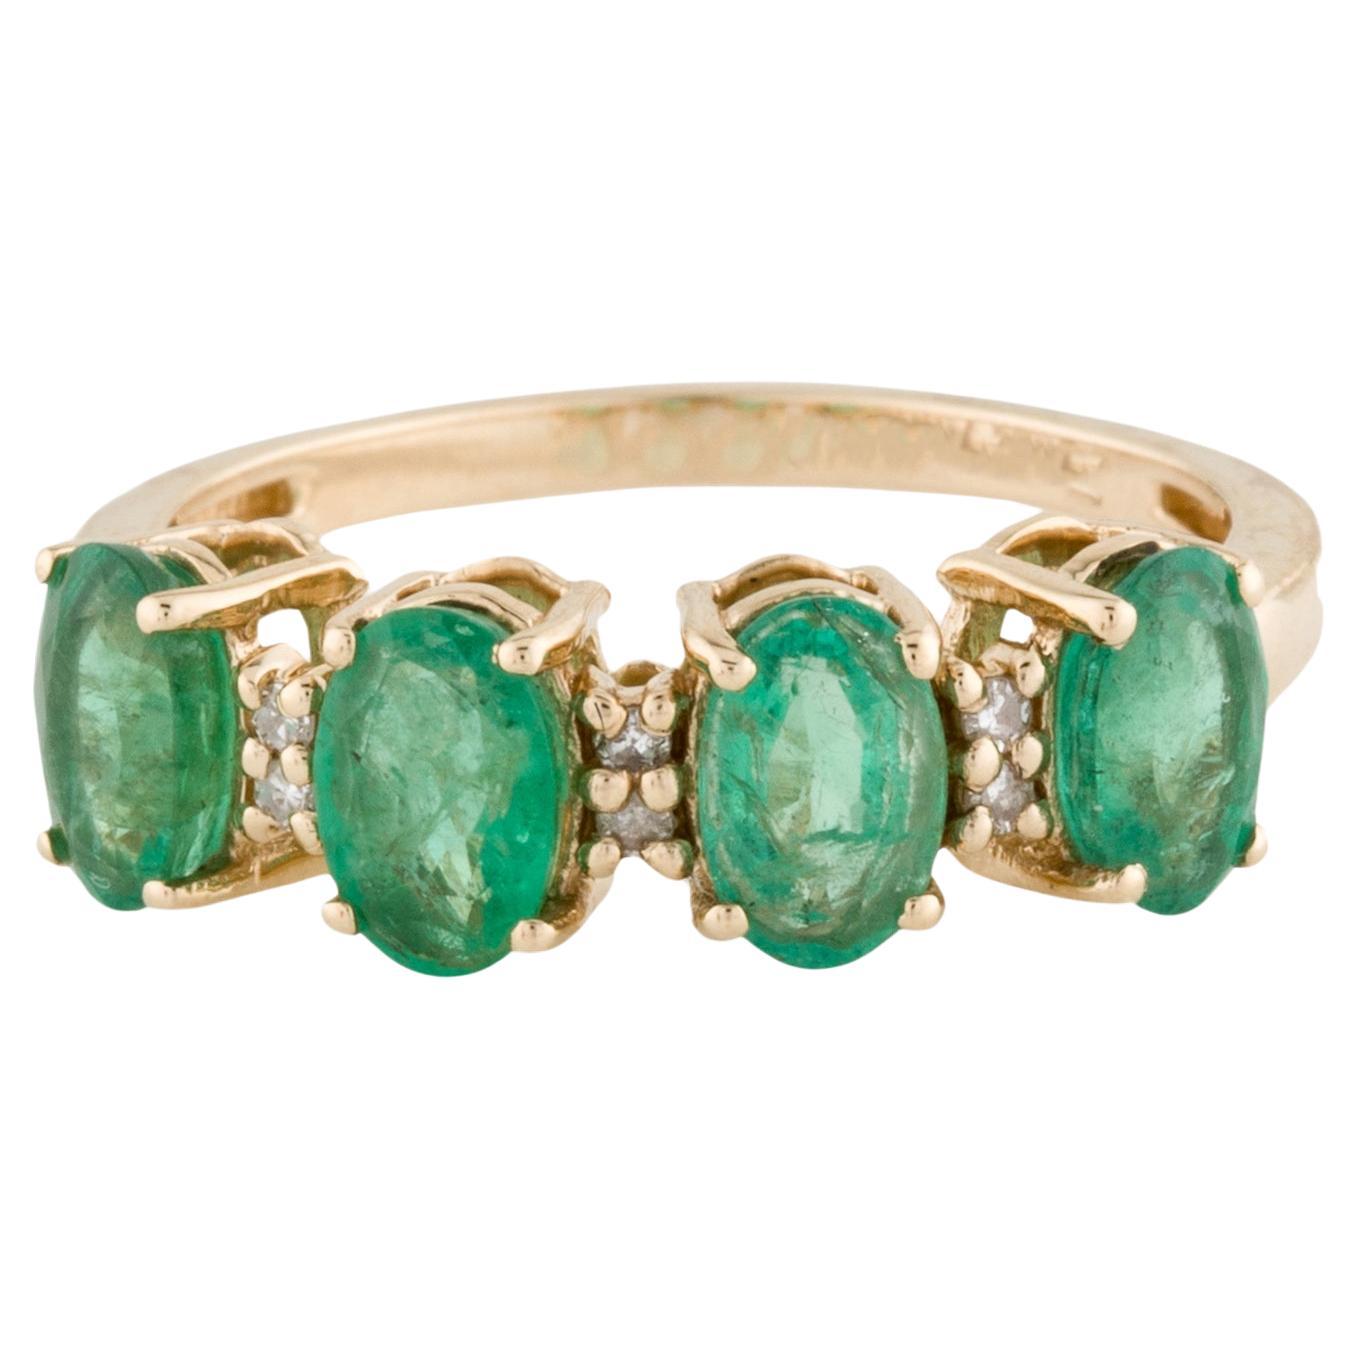 Stunning 14K Gold 1.87ctw Emerald & Diamond Band Size 6.75 - Elegant & Timeless For Sale